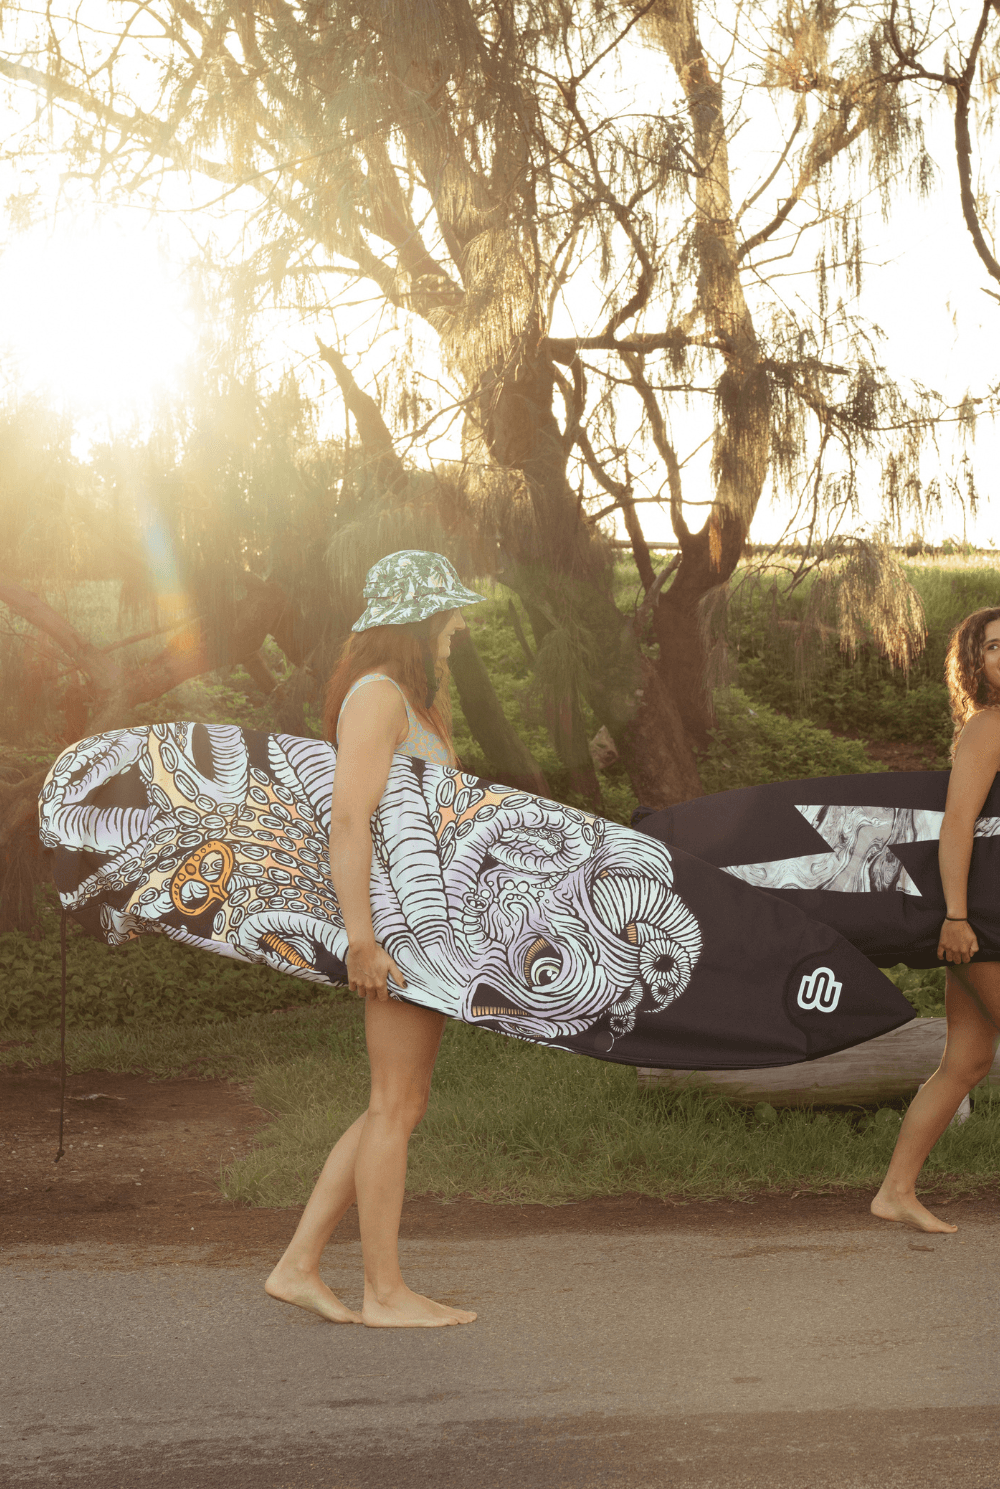 Kraken  -  Shortboard Surfboard Cover